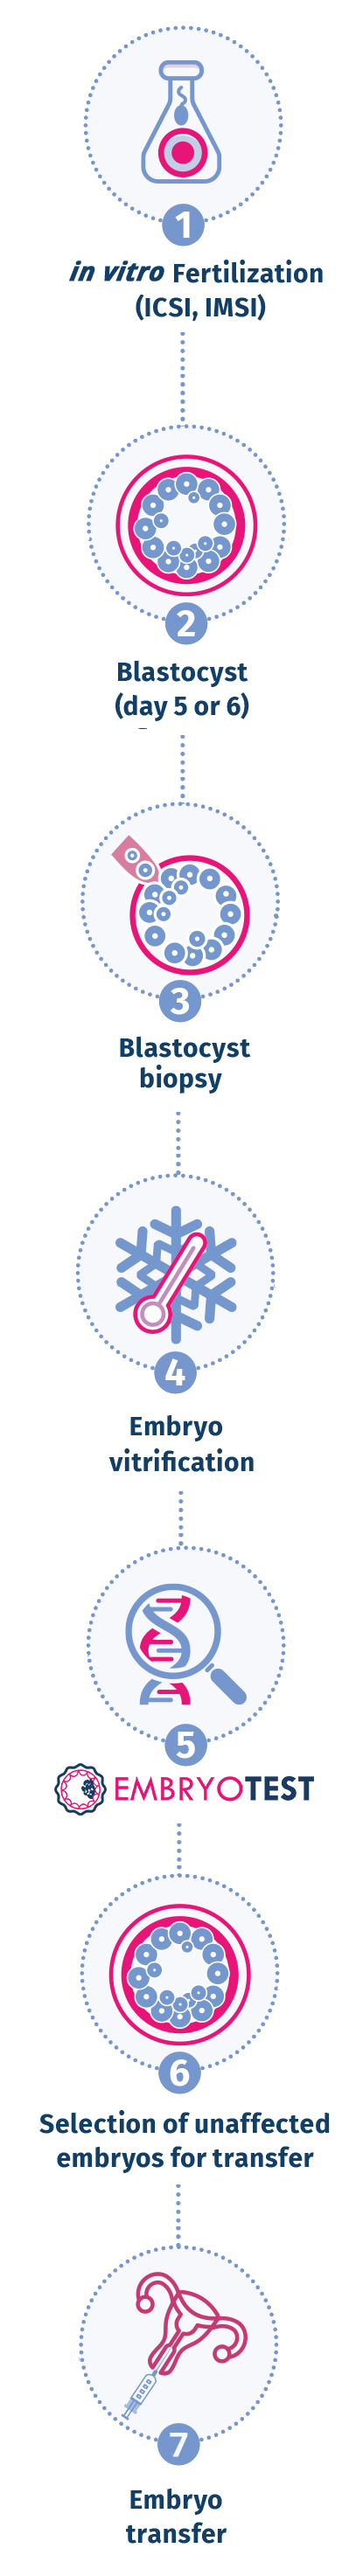 EmbryoTest Testing Process